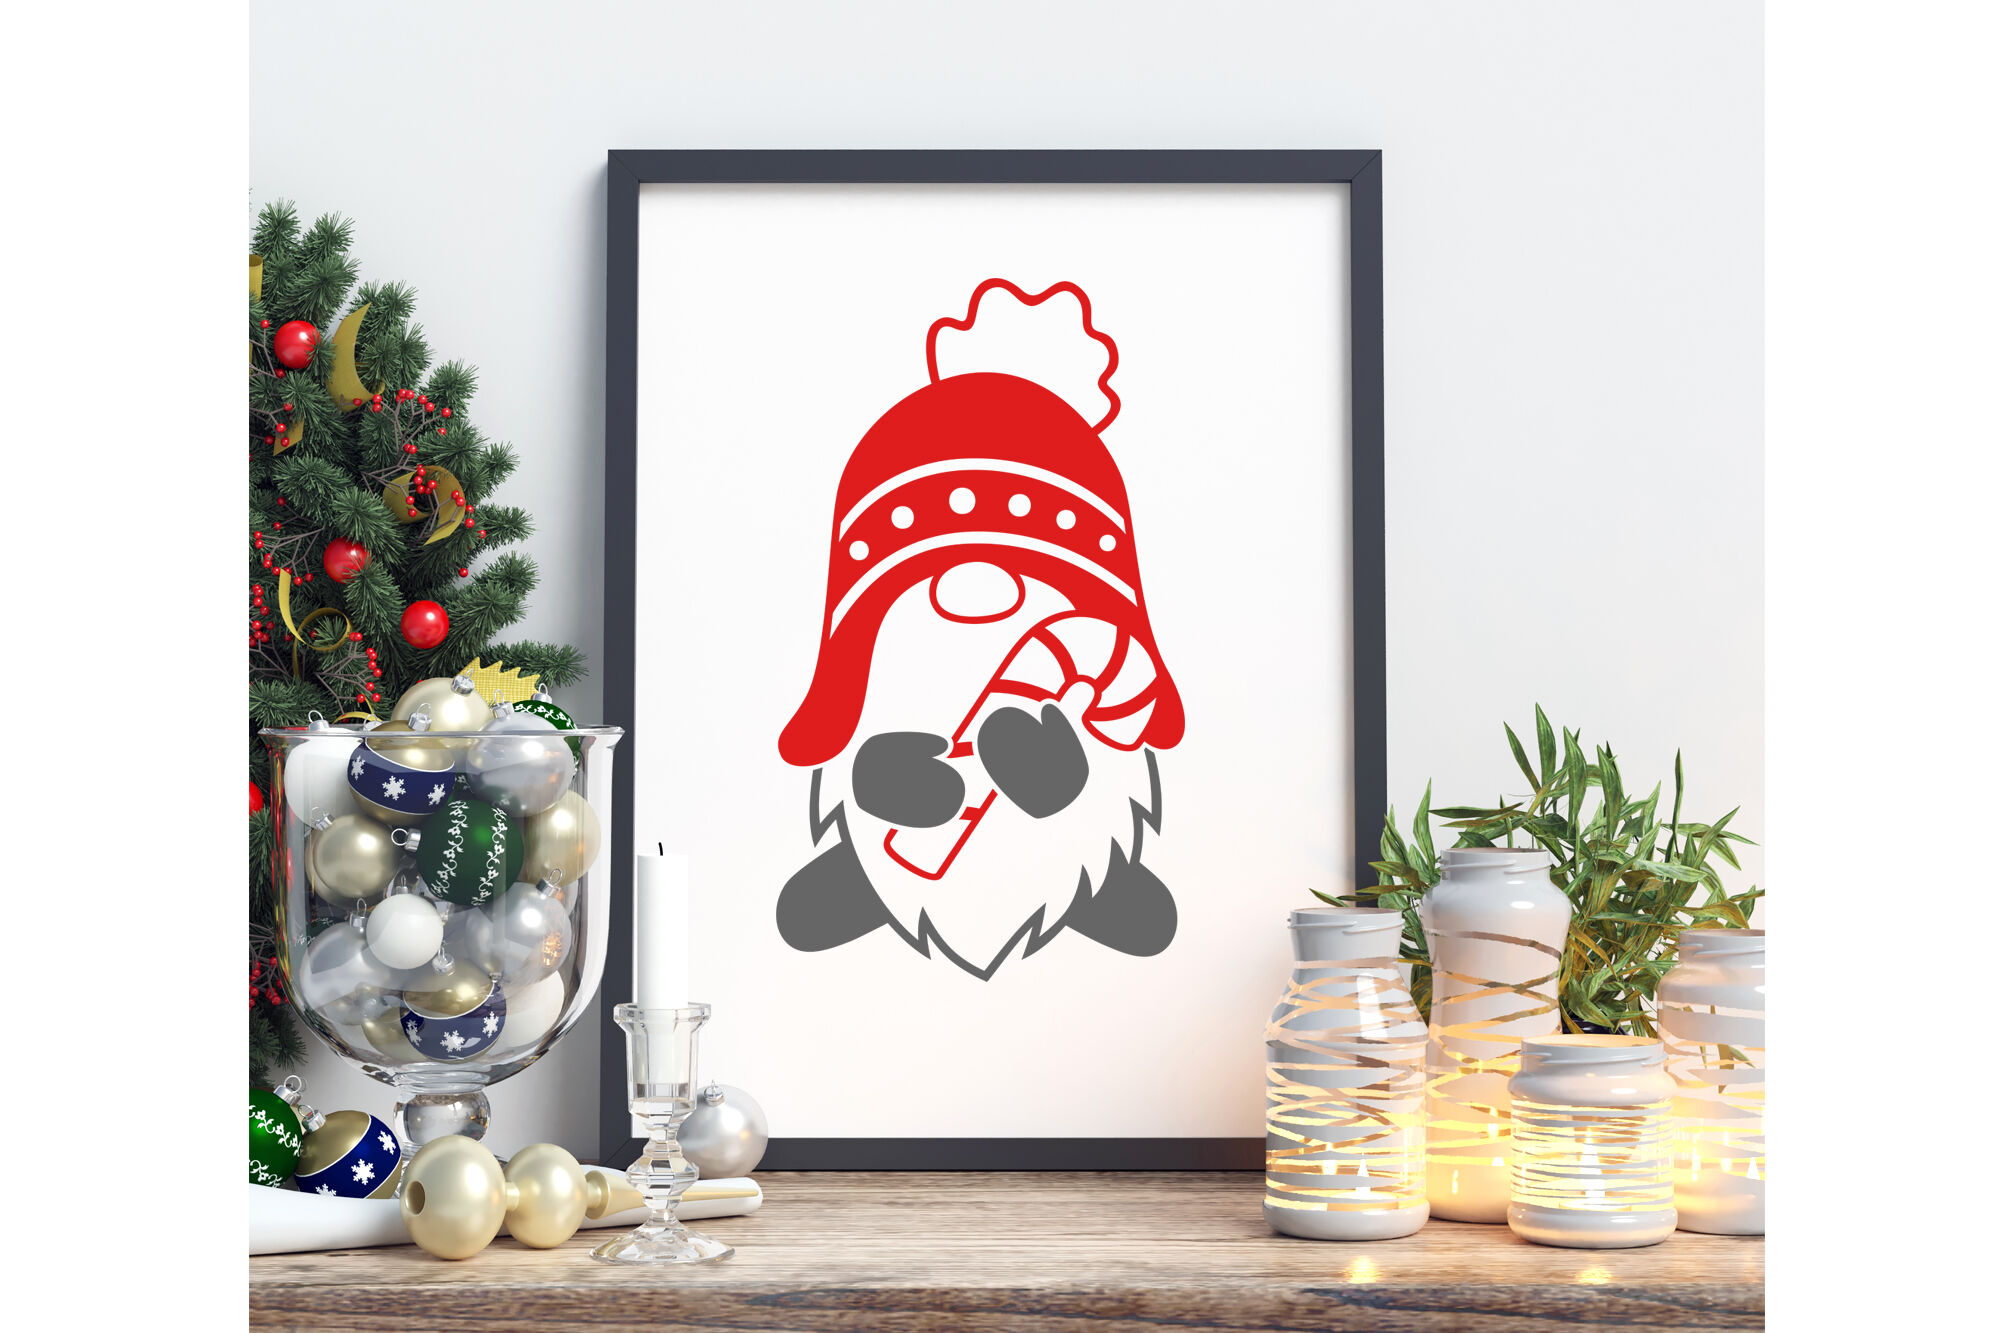 Christmas mug designs svg Christmas gnome svg files for cricut By Green